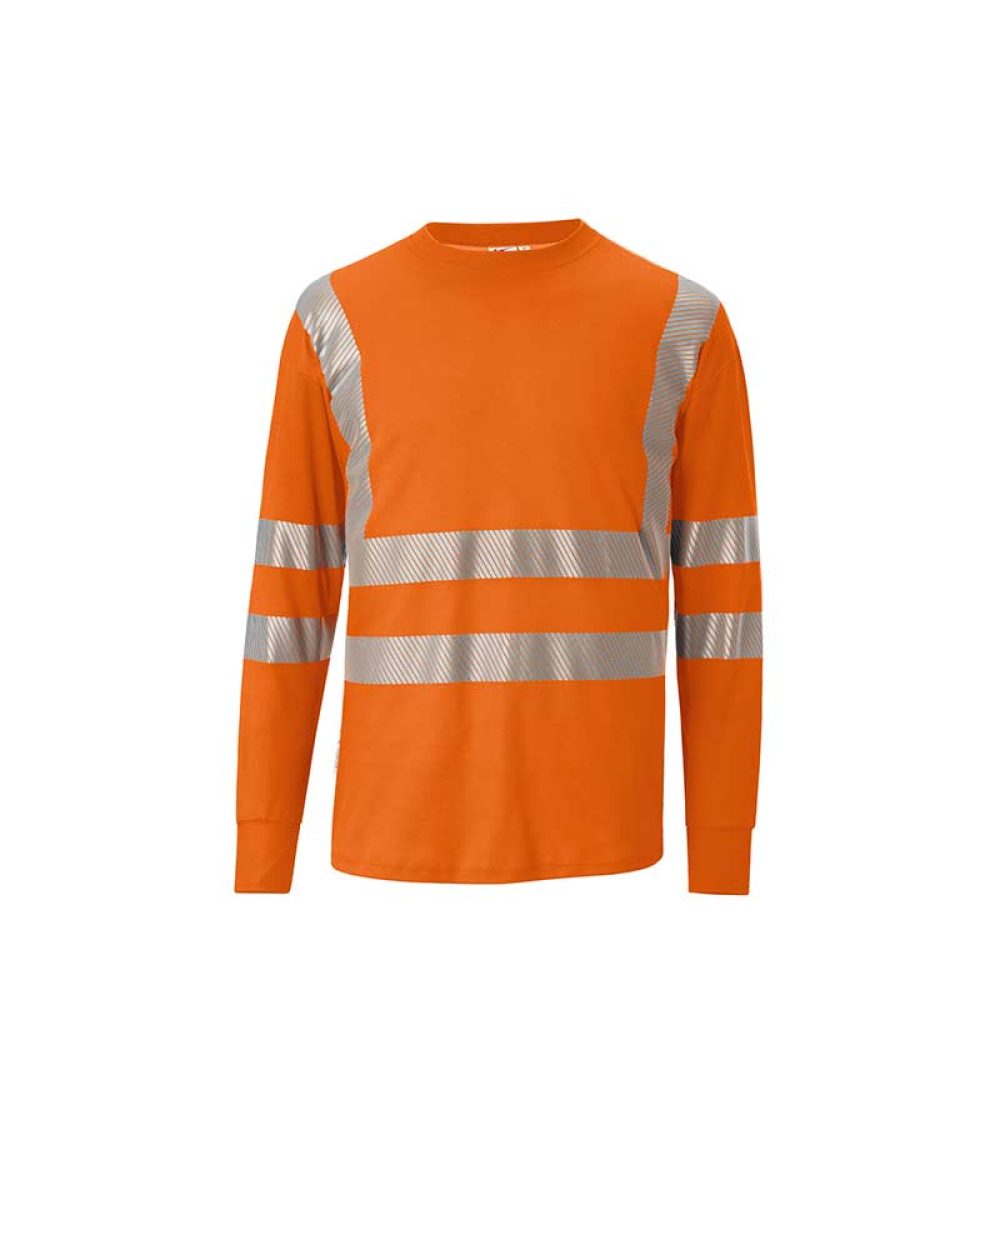 kuebler-warnschutz-sweatshirt-shirts-5045-8227-37